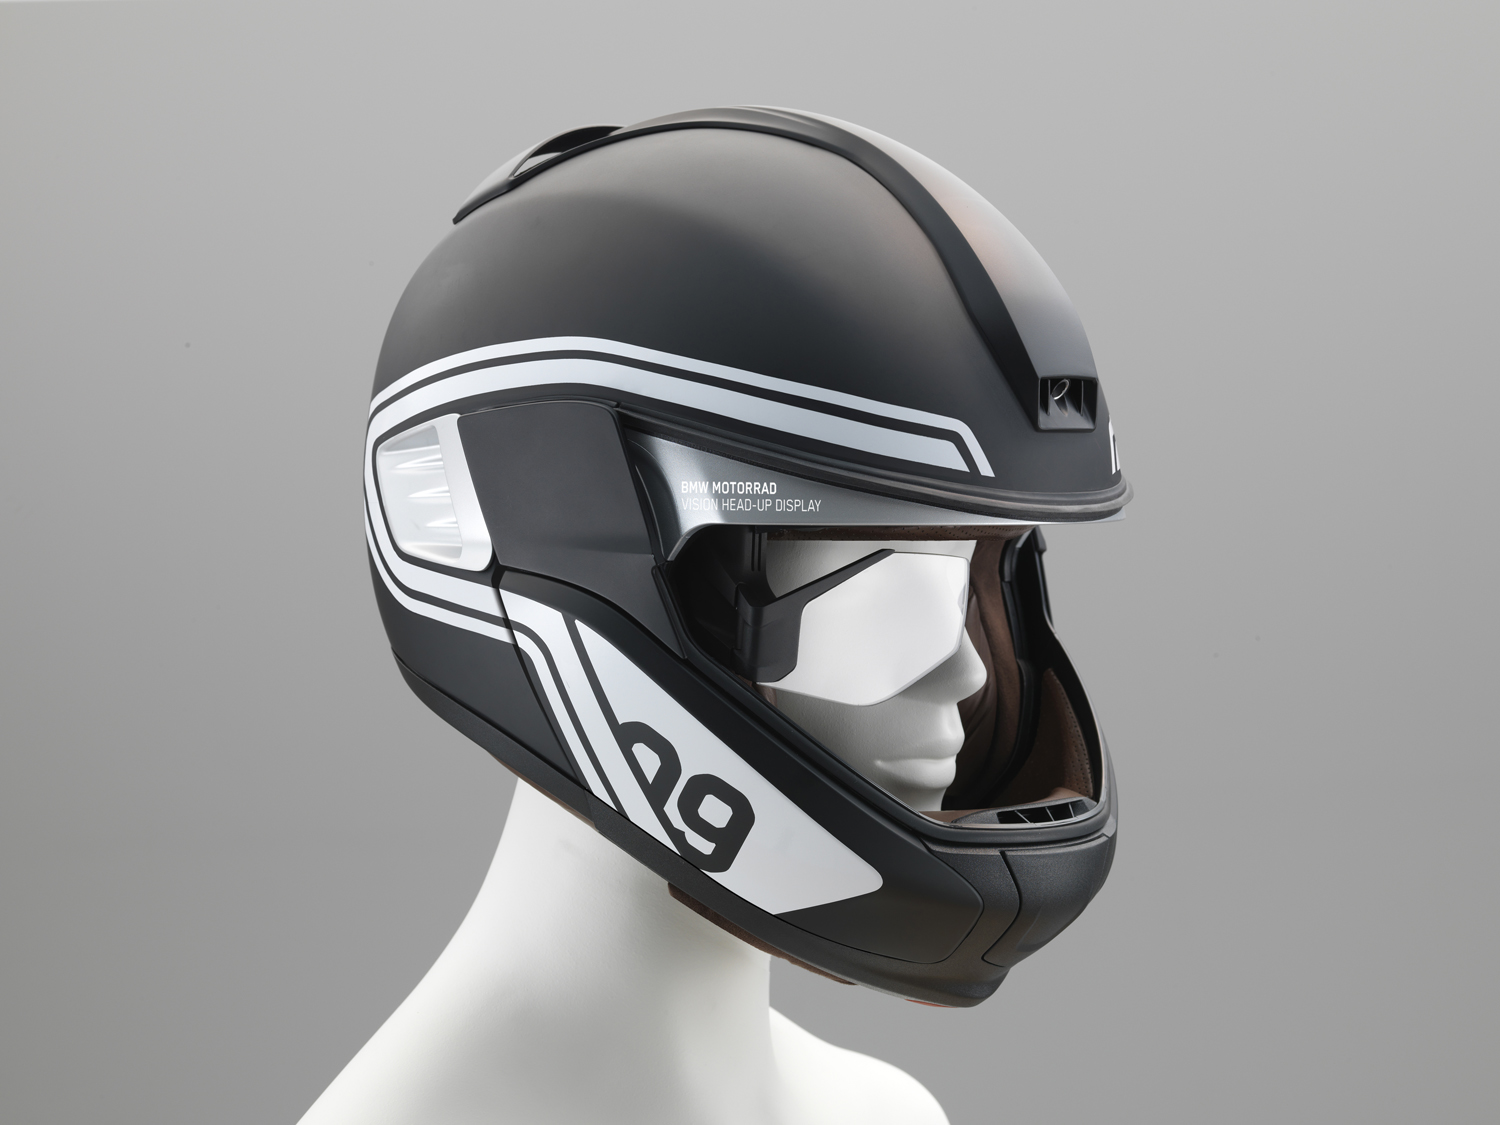 BMW Helmet HeadsUp Display Pics, Details, Demo Digital Trends